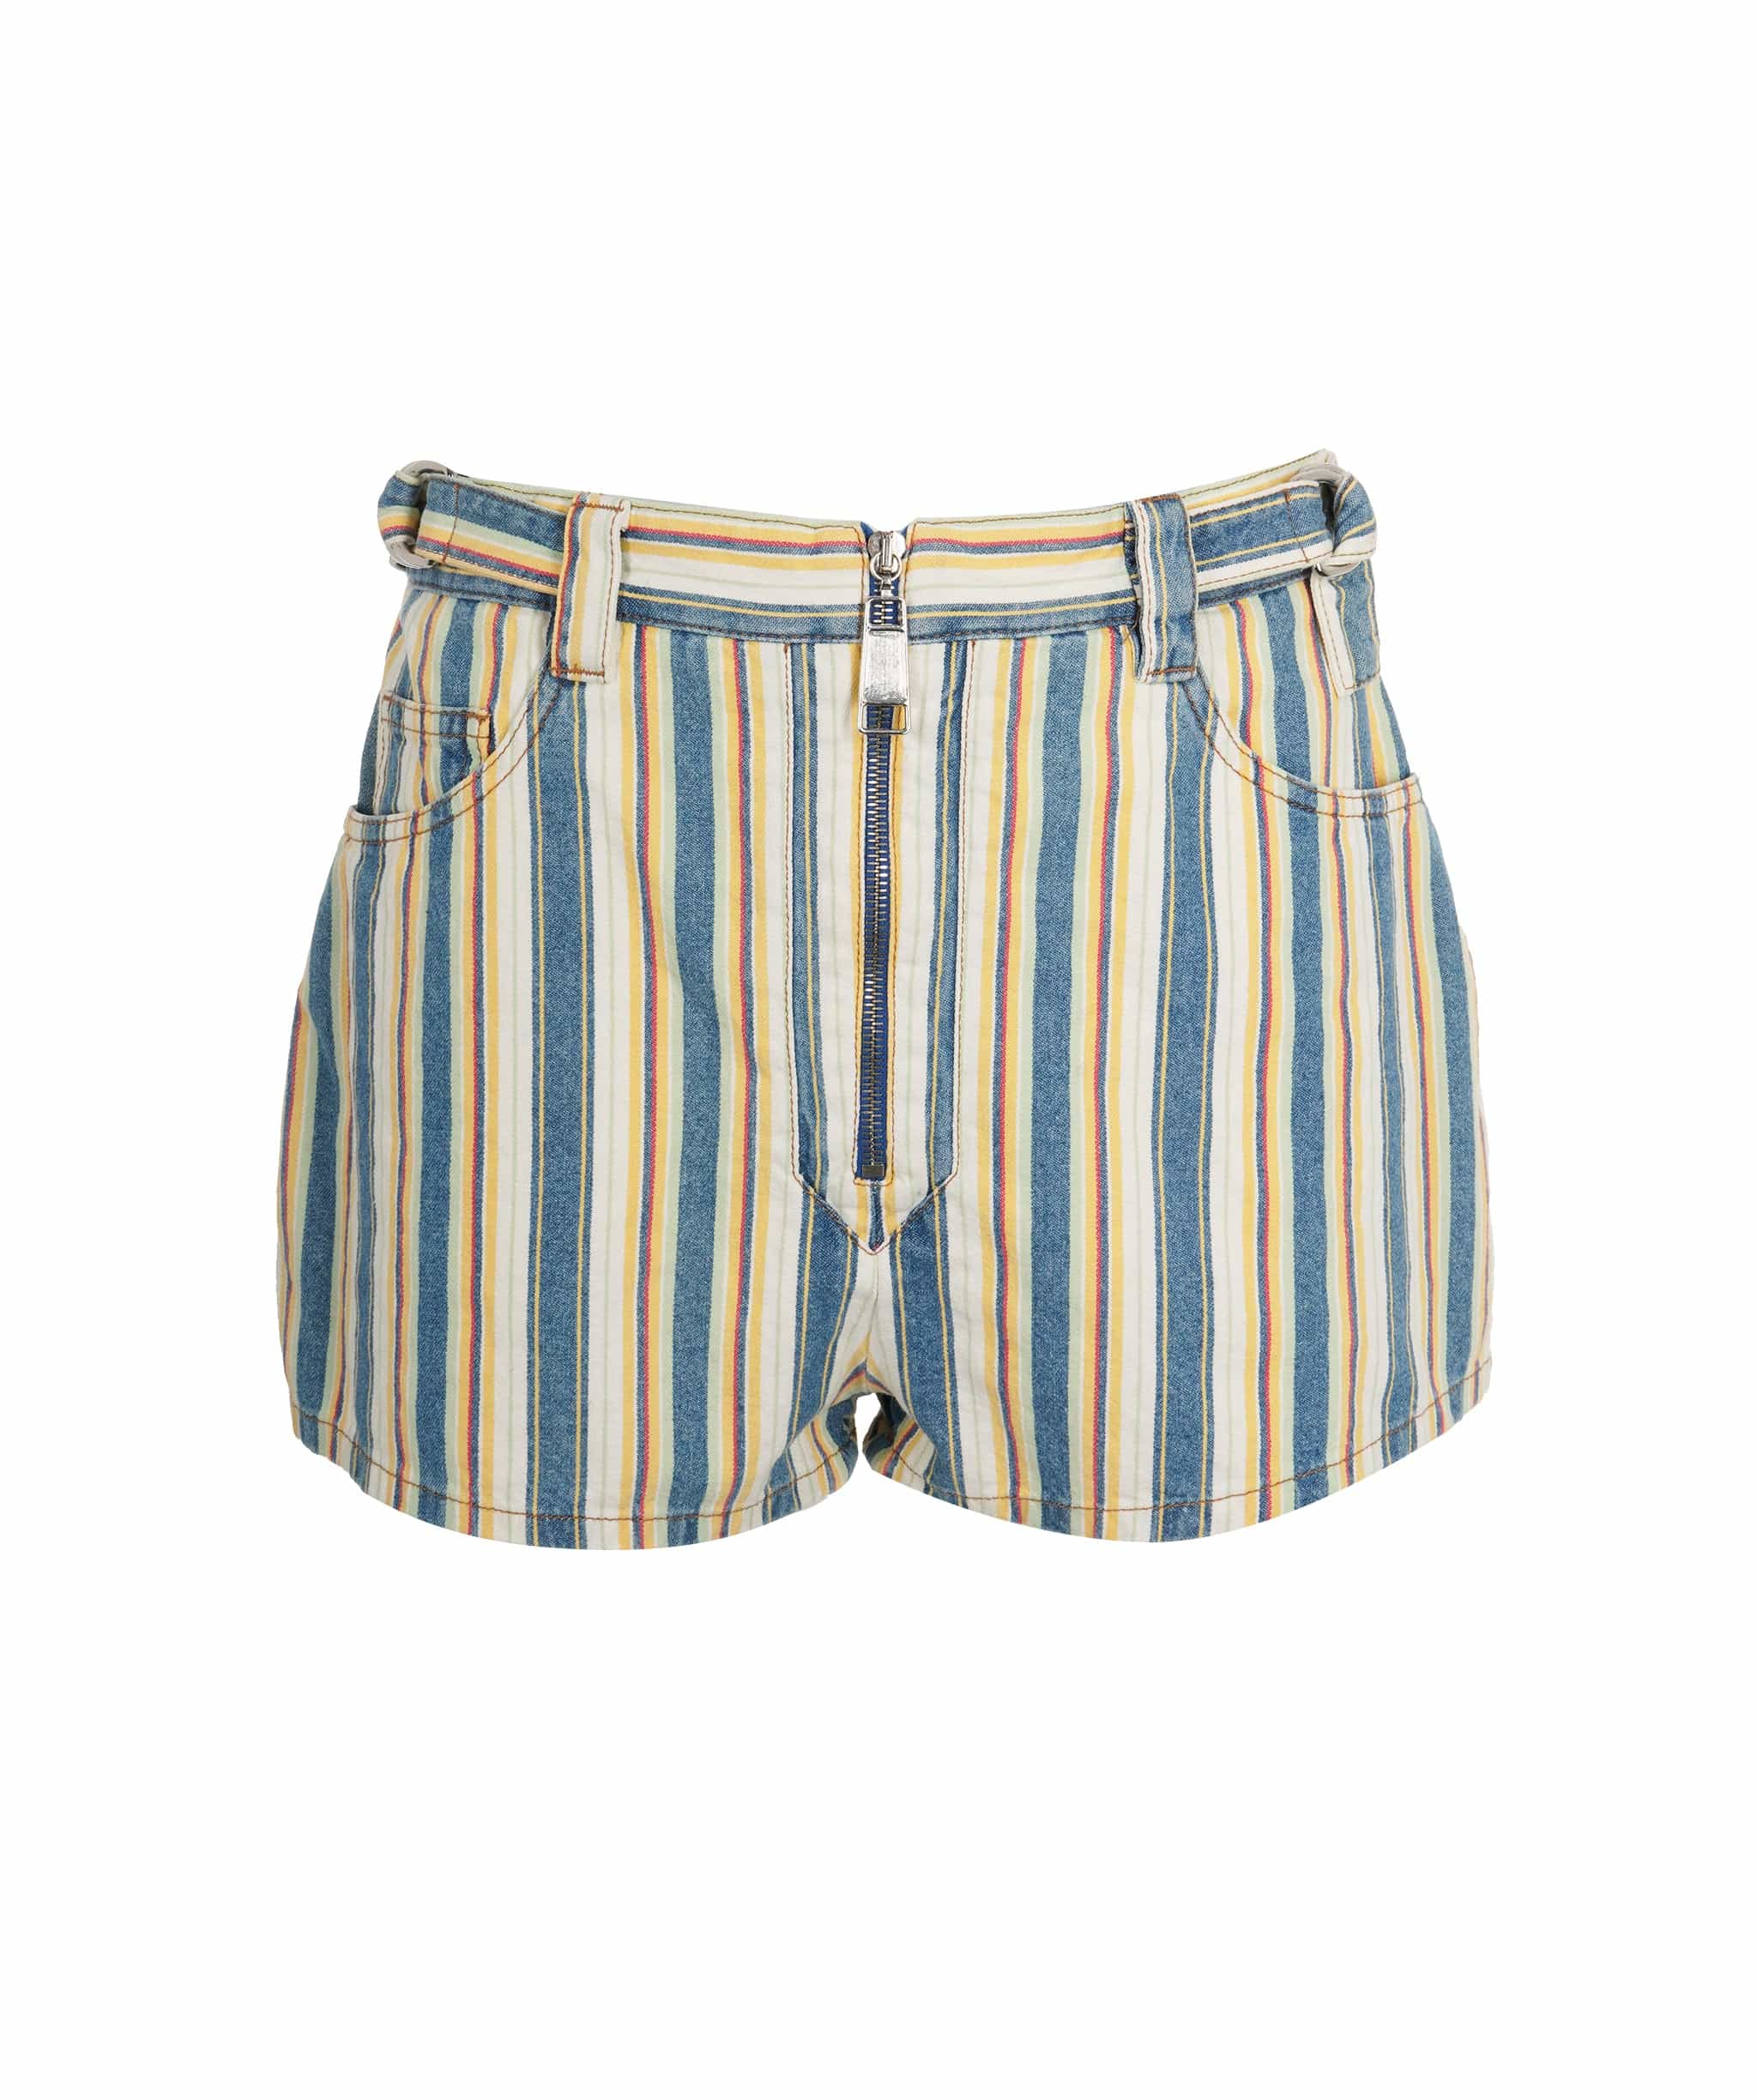 Miu Miu Miu Miu Striped shorts ALL0632